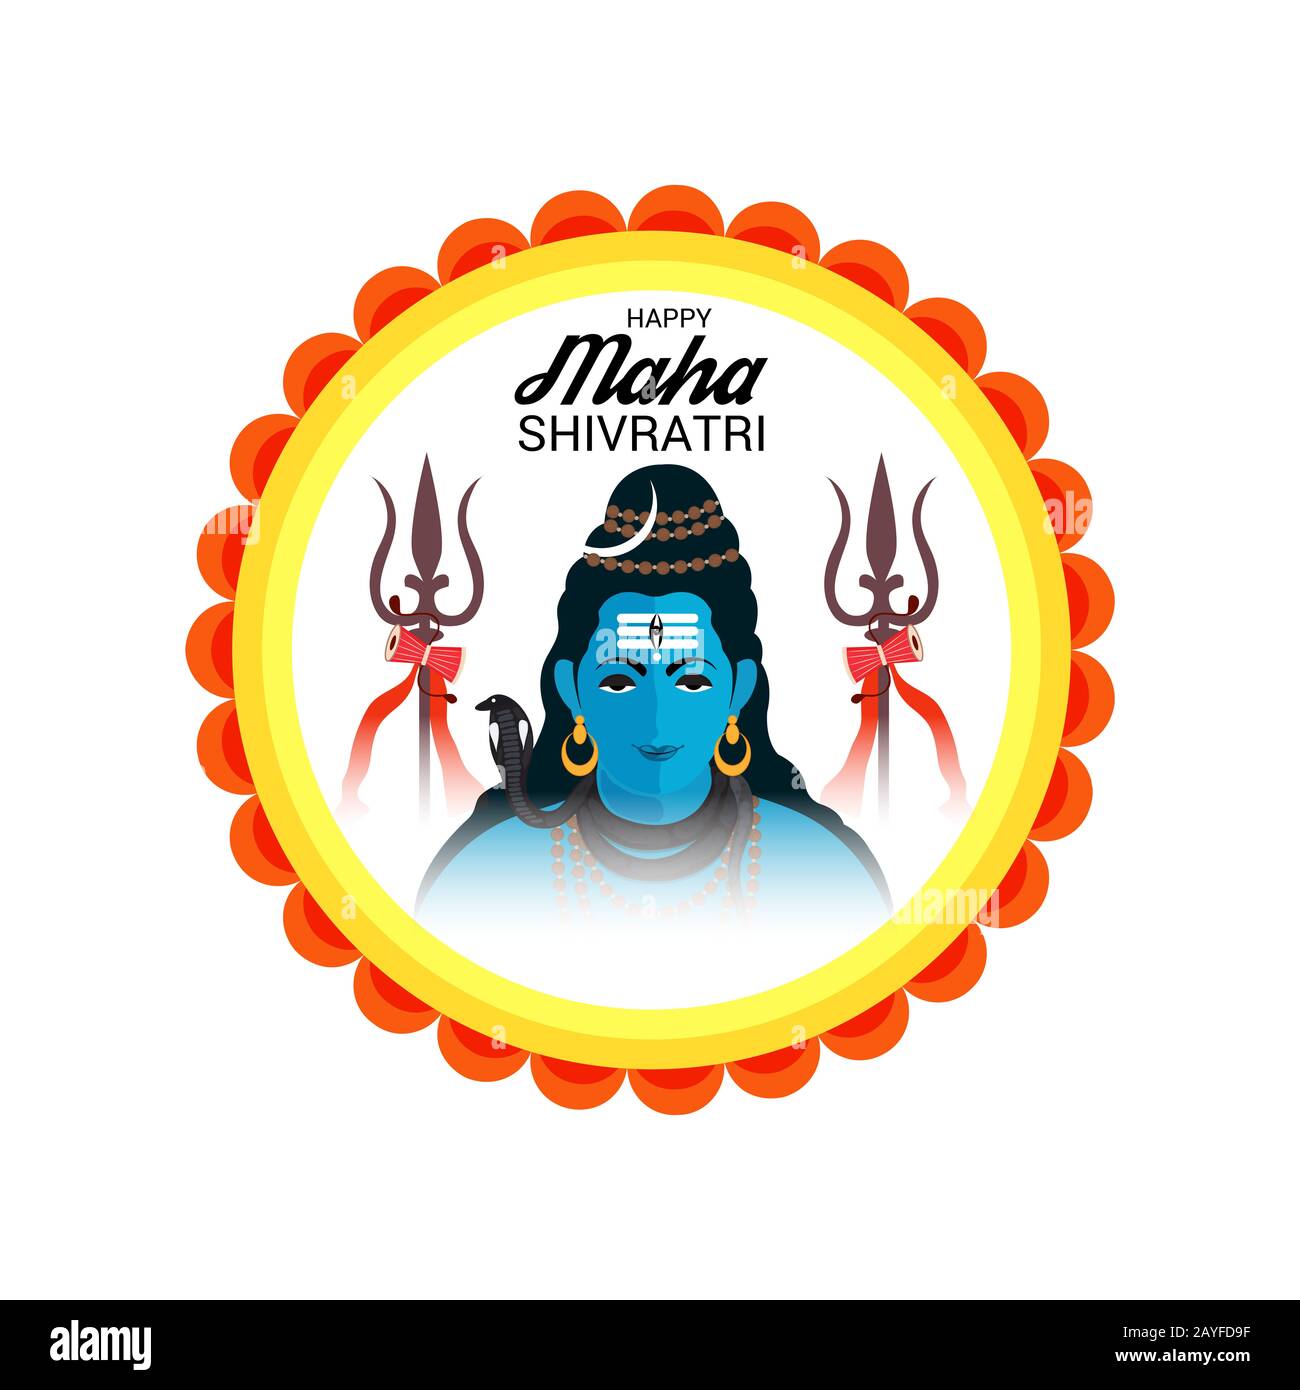 Vector illustration Of a Background for Hindu Festival Celebrate Of Shiva  Lord,Happy Maha Shivratri with Hindi Text Stock Photo - Alamy